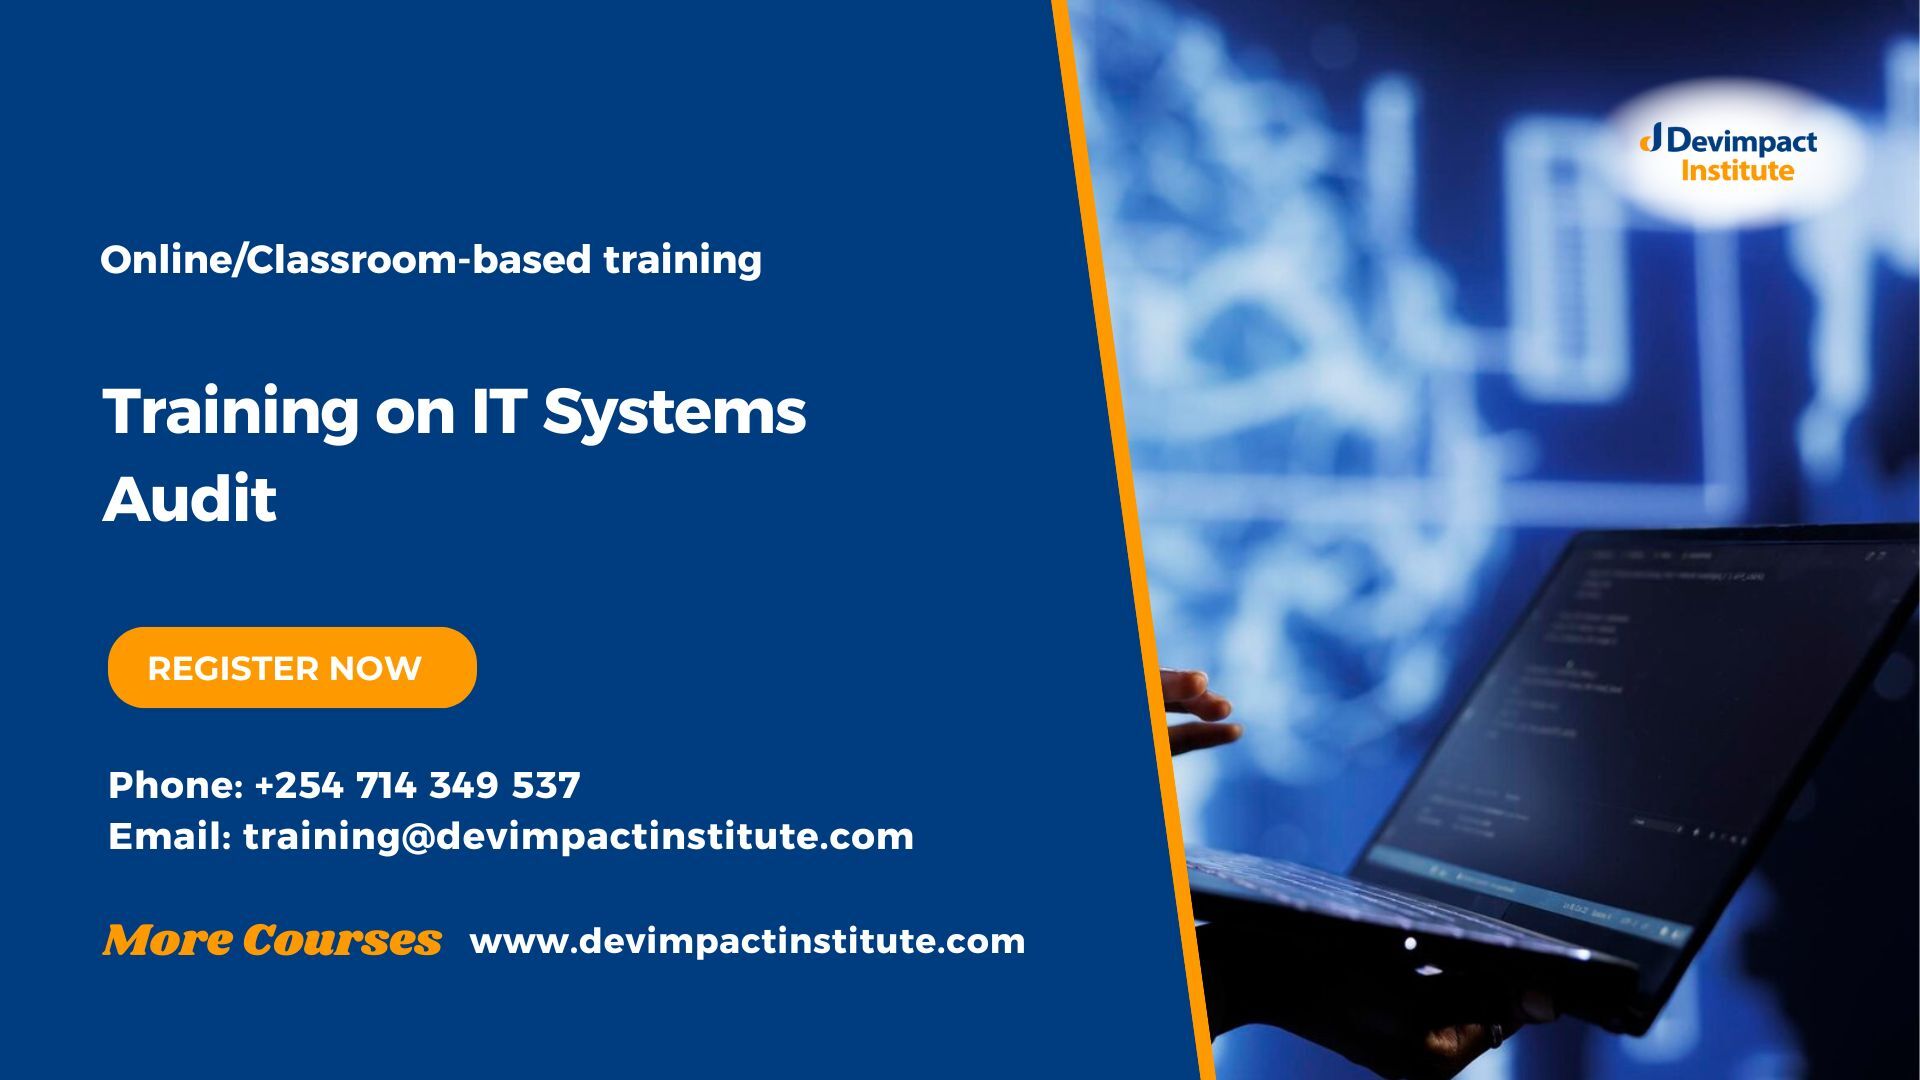 Training on IT Systems Audit, Devimpact Institute, Nairobi, Kenya